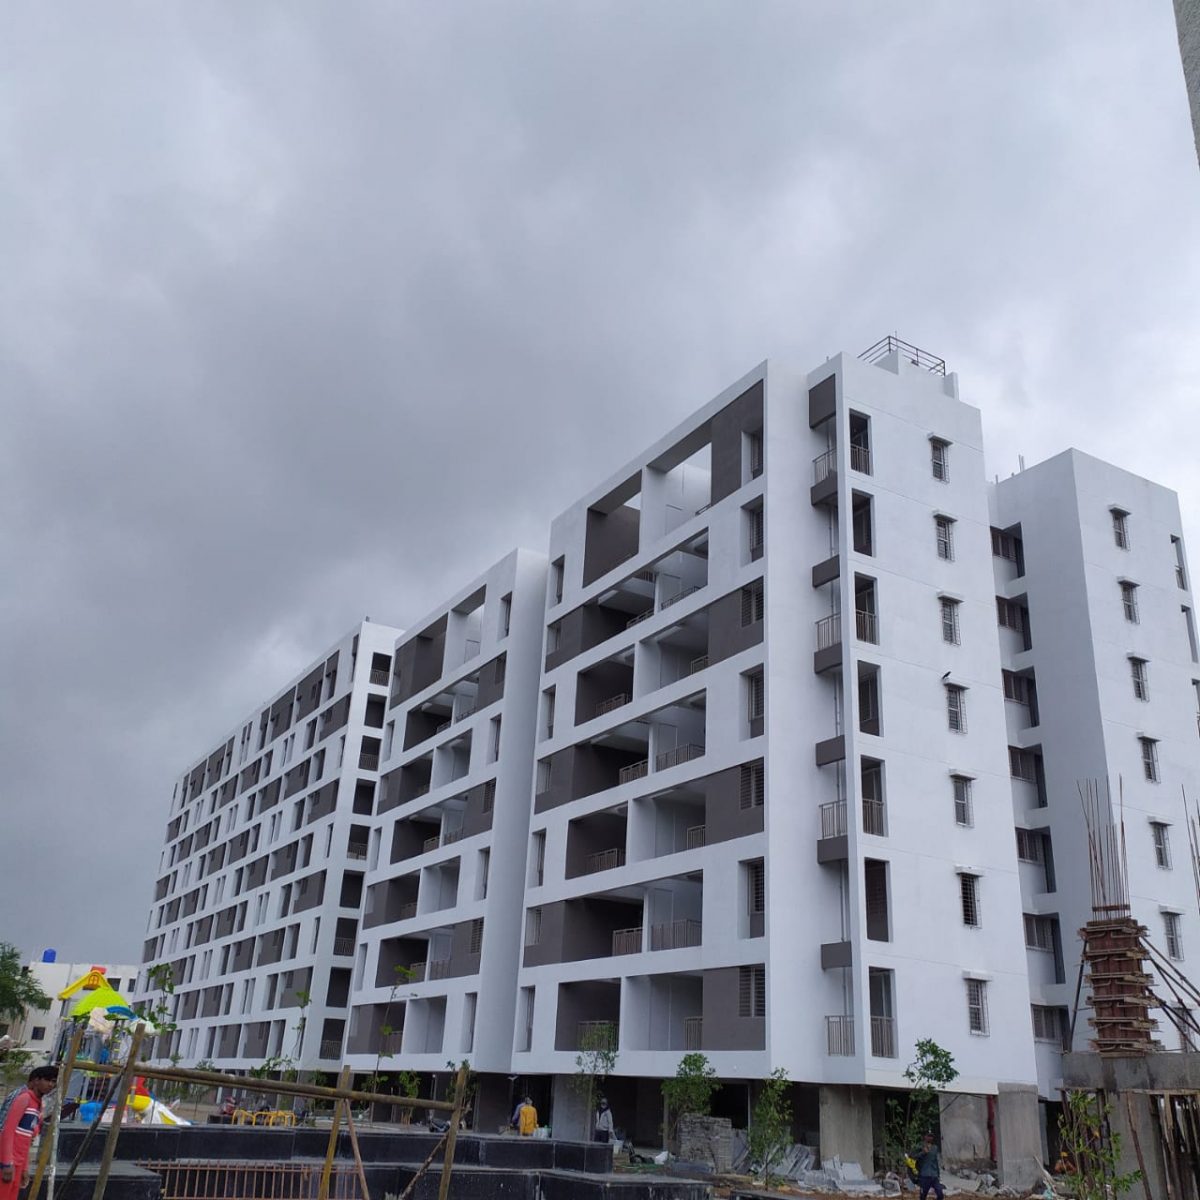 Happycity Jijamata Chowk Talegaon Dabhade, Pune Construction Updates August 2021